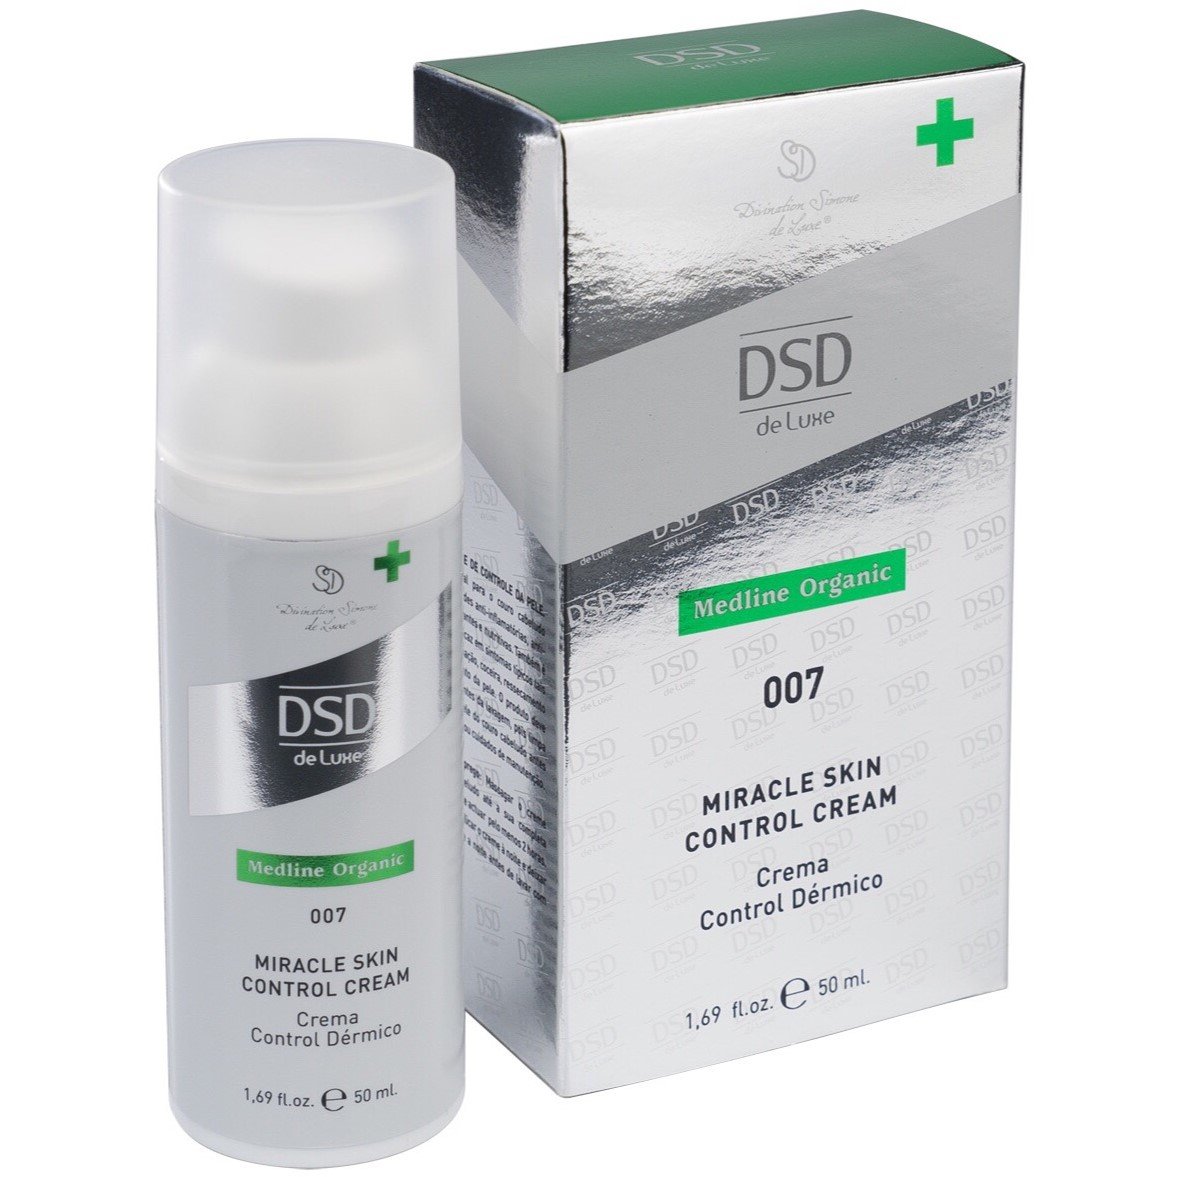 Крем DSD de Luxe 007 Medline Organic Miracle Skin Control Cream для лечения кожи головы, 50 мл - фото 1